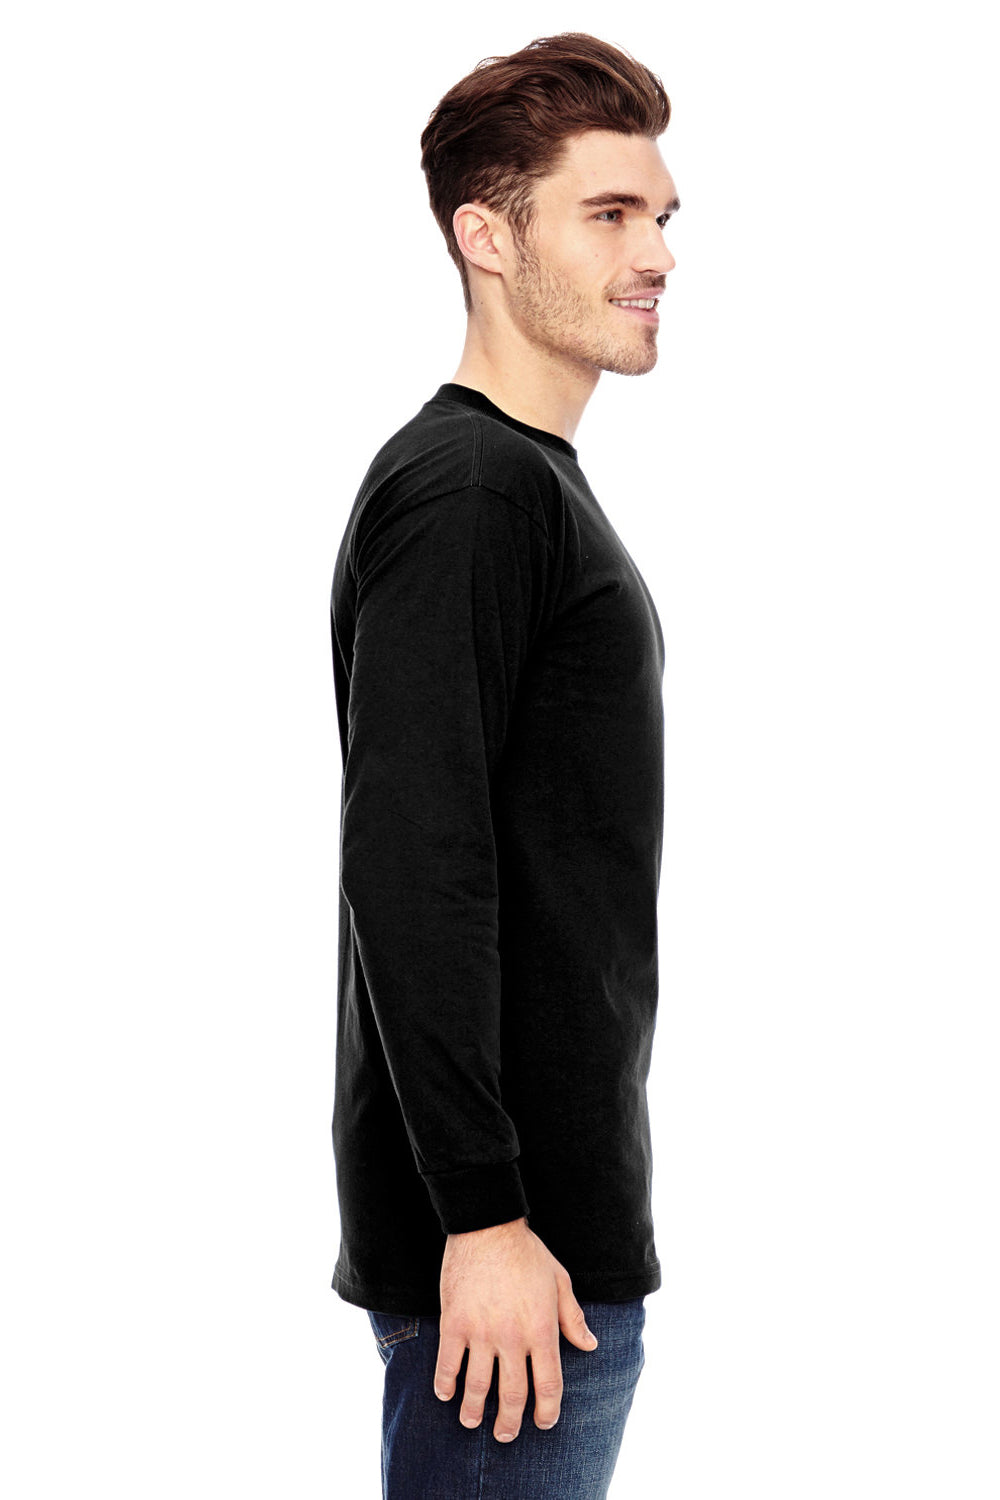 Bayside BA6100 Mens USA Made Long Sleeve Crewneck T-Shirt Black Model Side